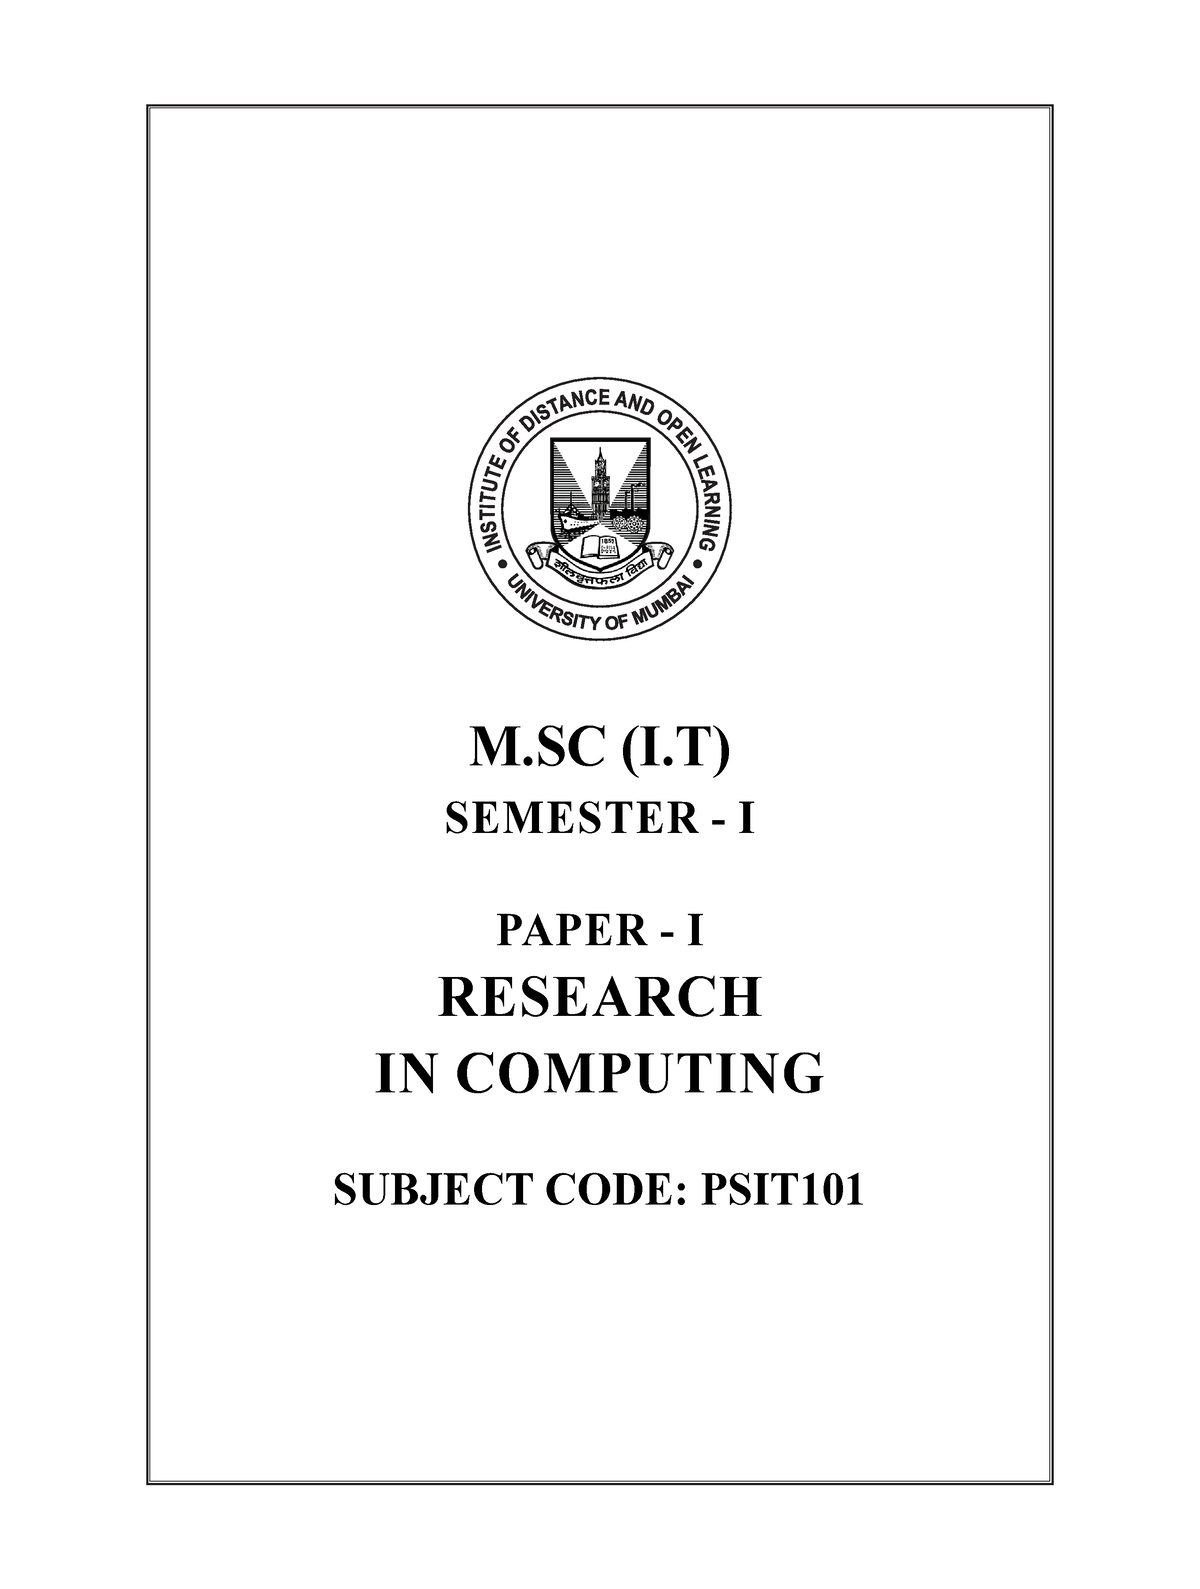 Research In Computing M - M (I) SEMESTER - I PAPER - I RESEARCH IN ...